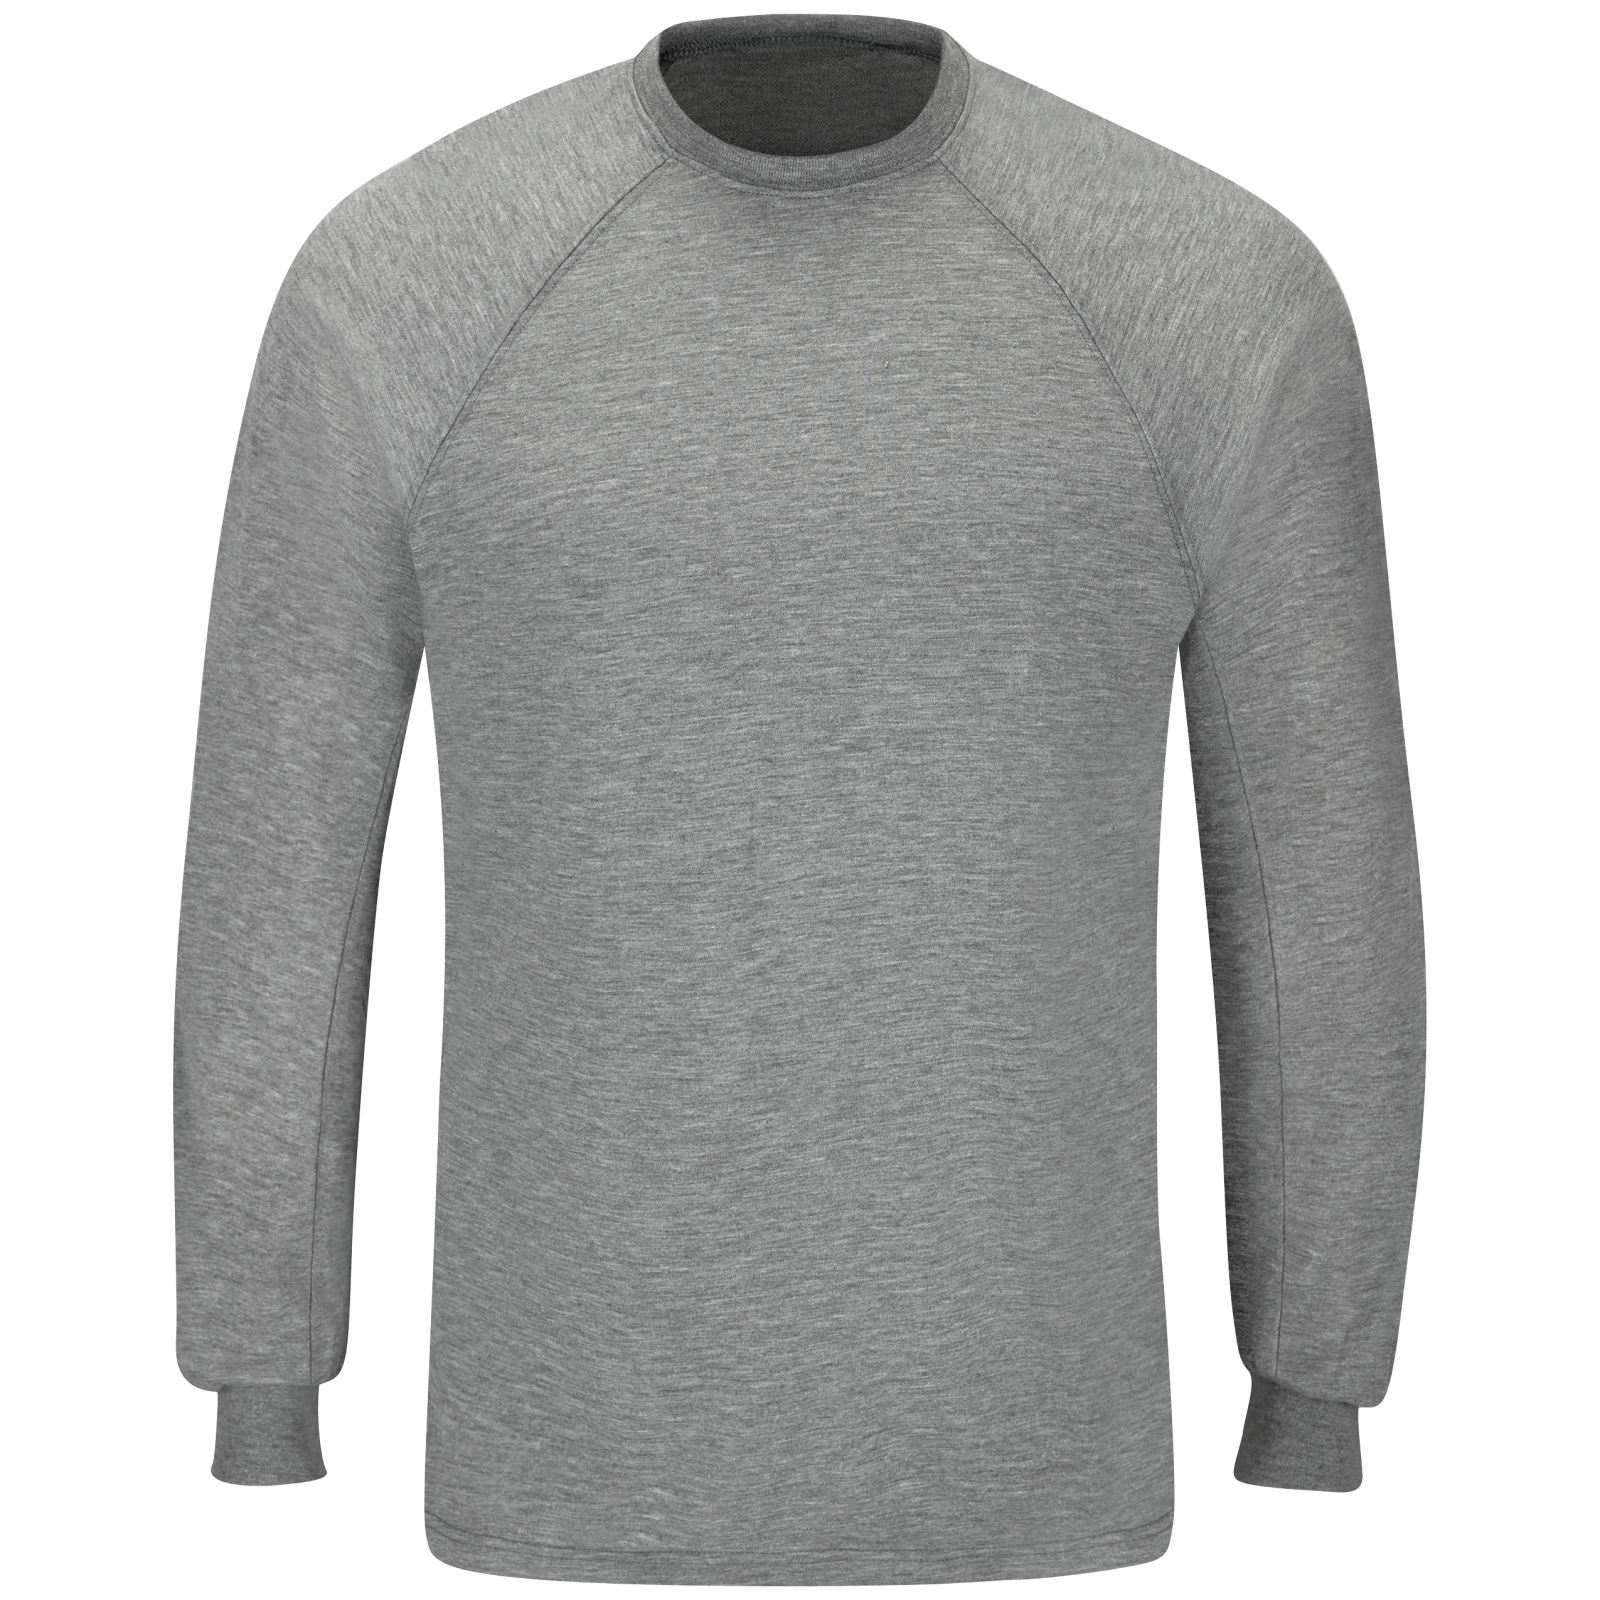 Workrite Flame Resistant 6.7 oz Tecasafe Long Sleeve T-Shirt, Heather Gray, Medium